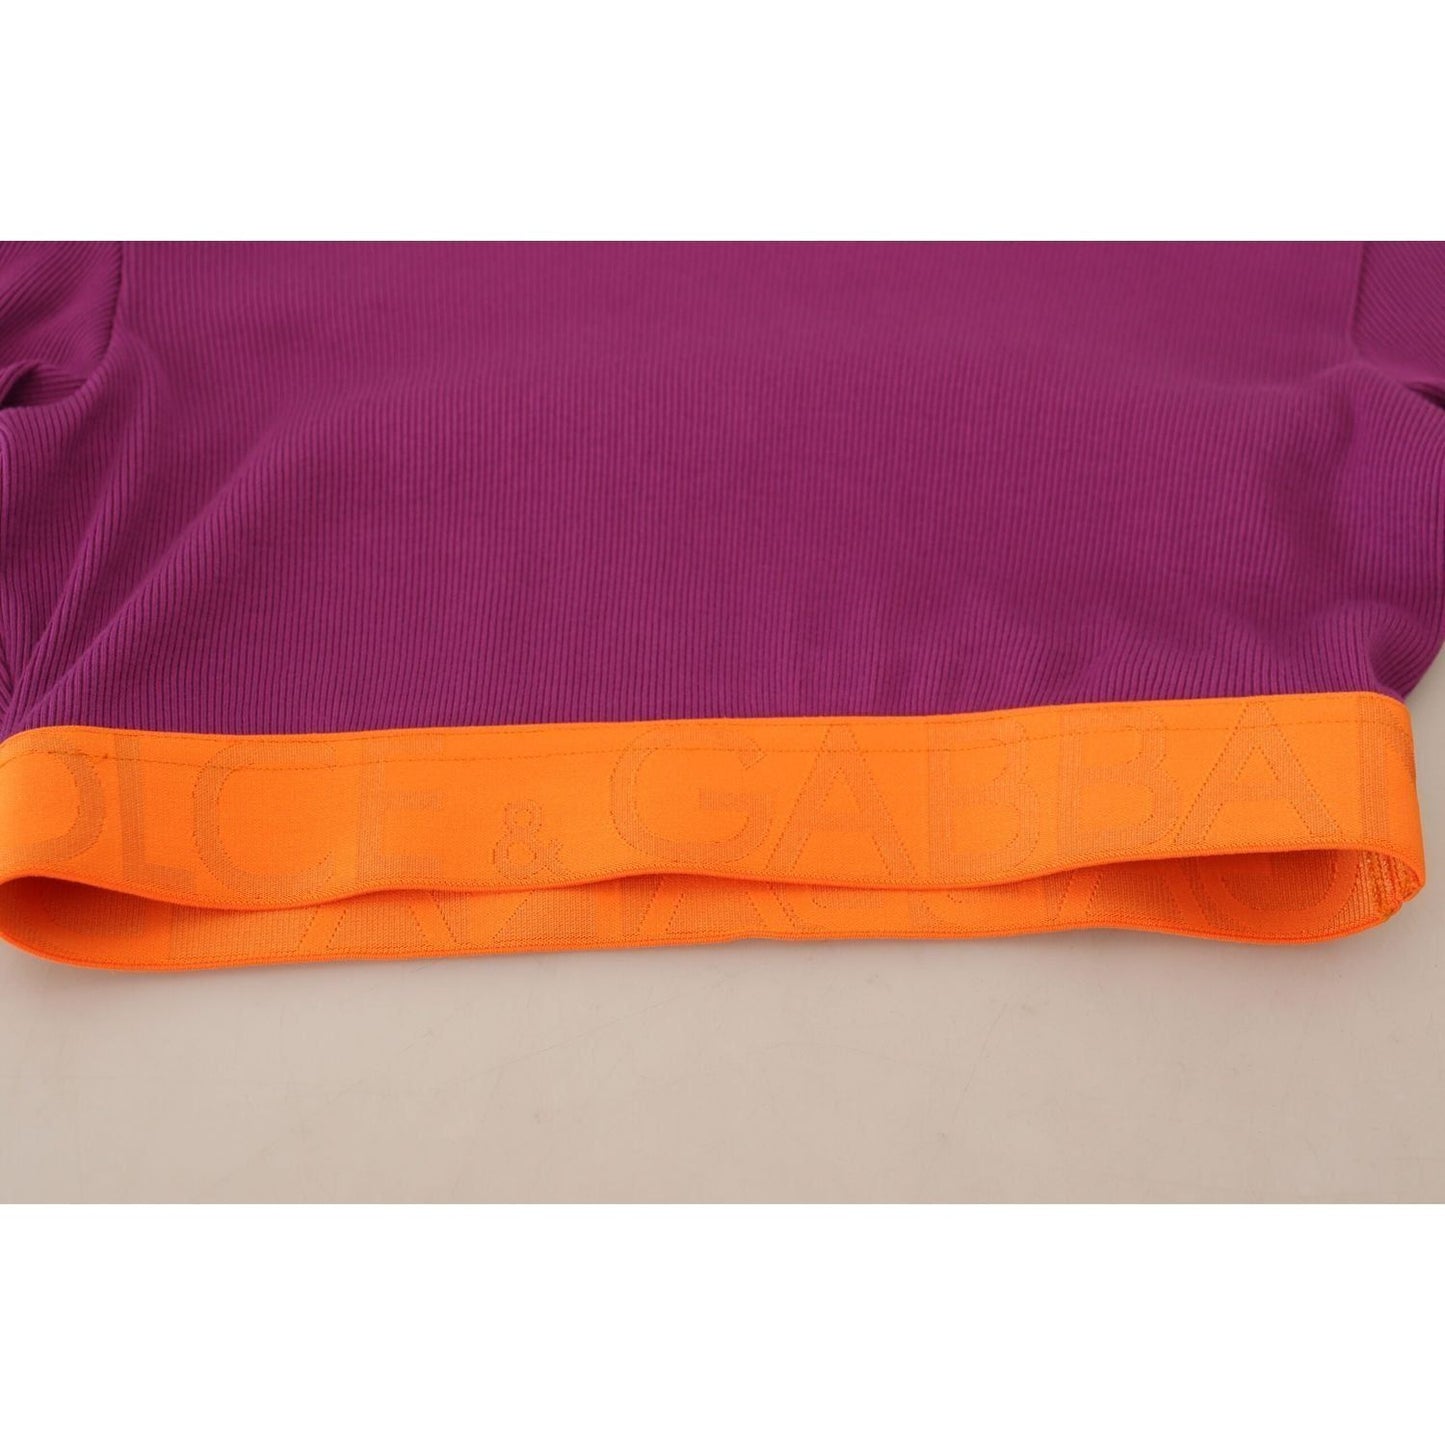 Dolce & Gabbana Elegant Purple Turtle Neck Pullover Sweater purple-turtle-neck-cropped-pullover-sweater IMG_2709-scaled-db0f1c0c-666.jpg